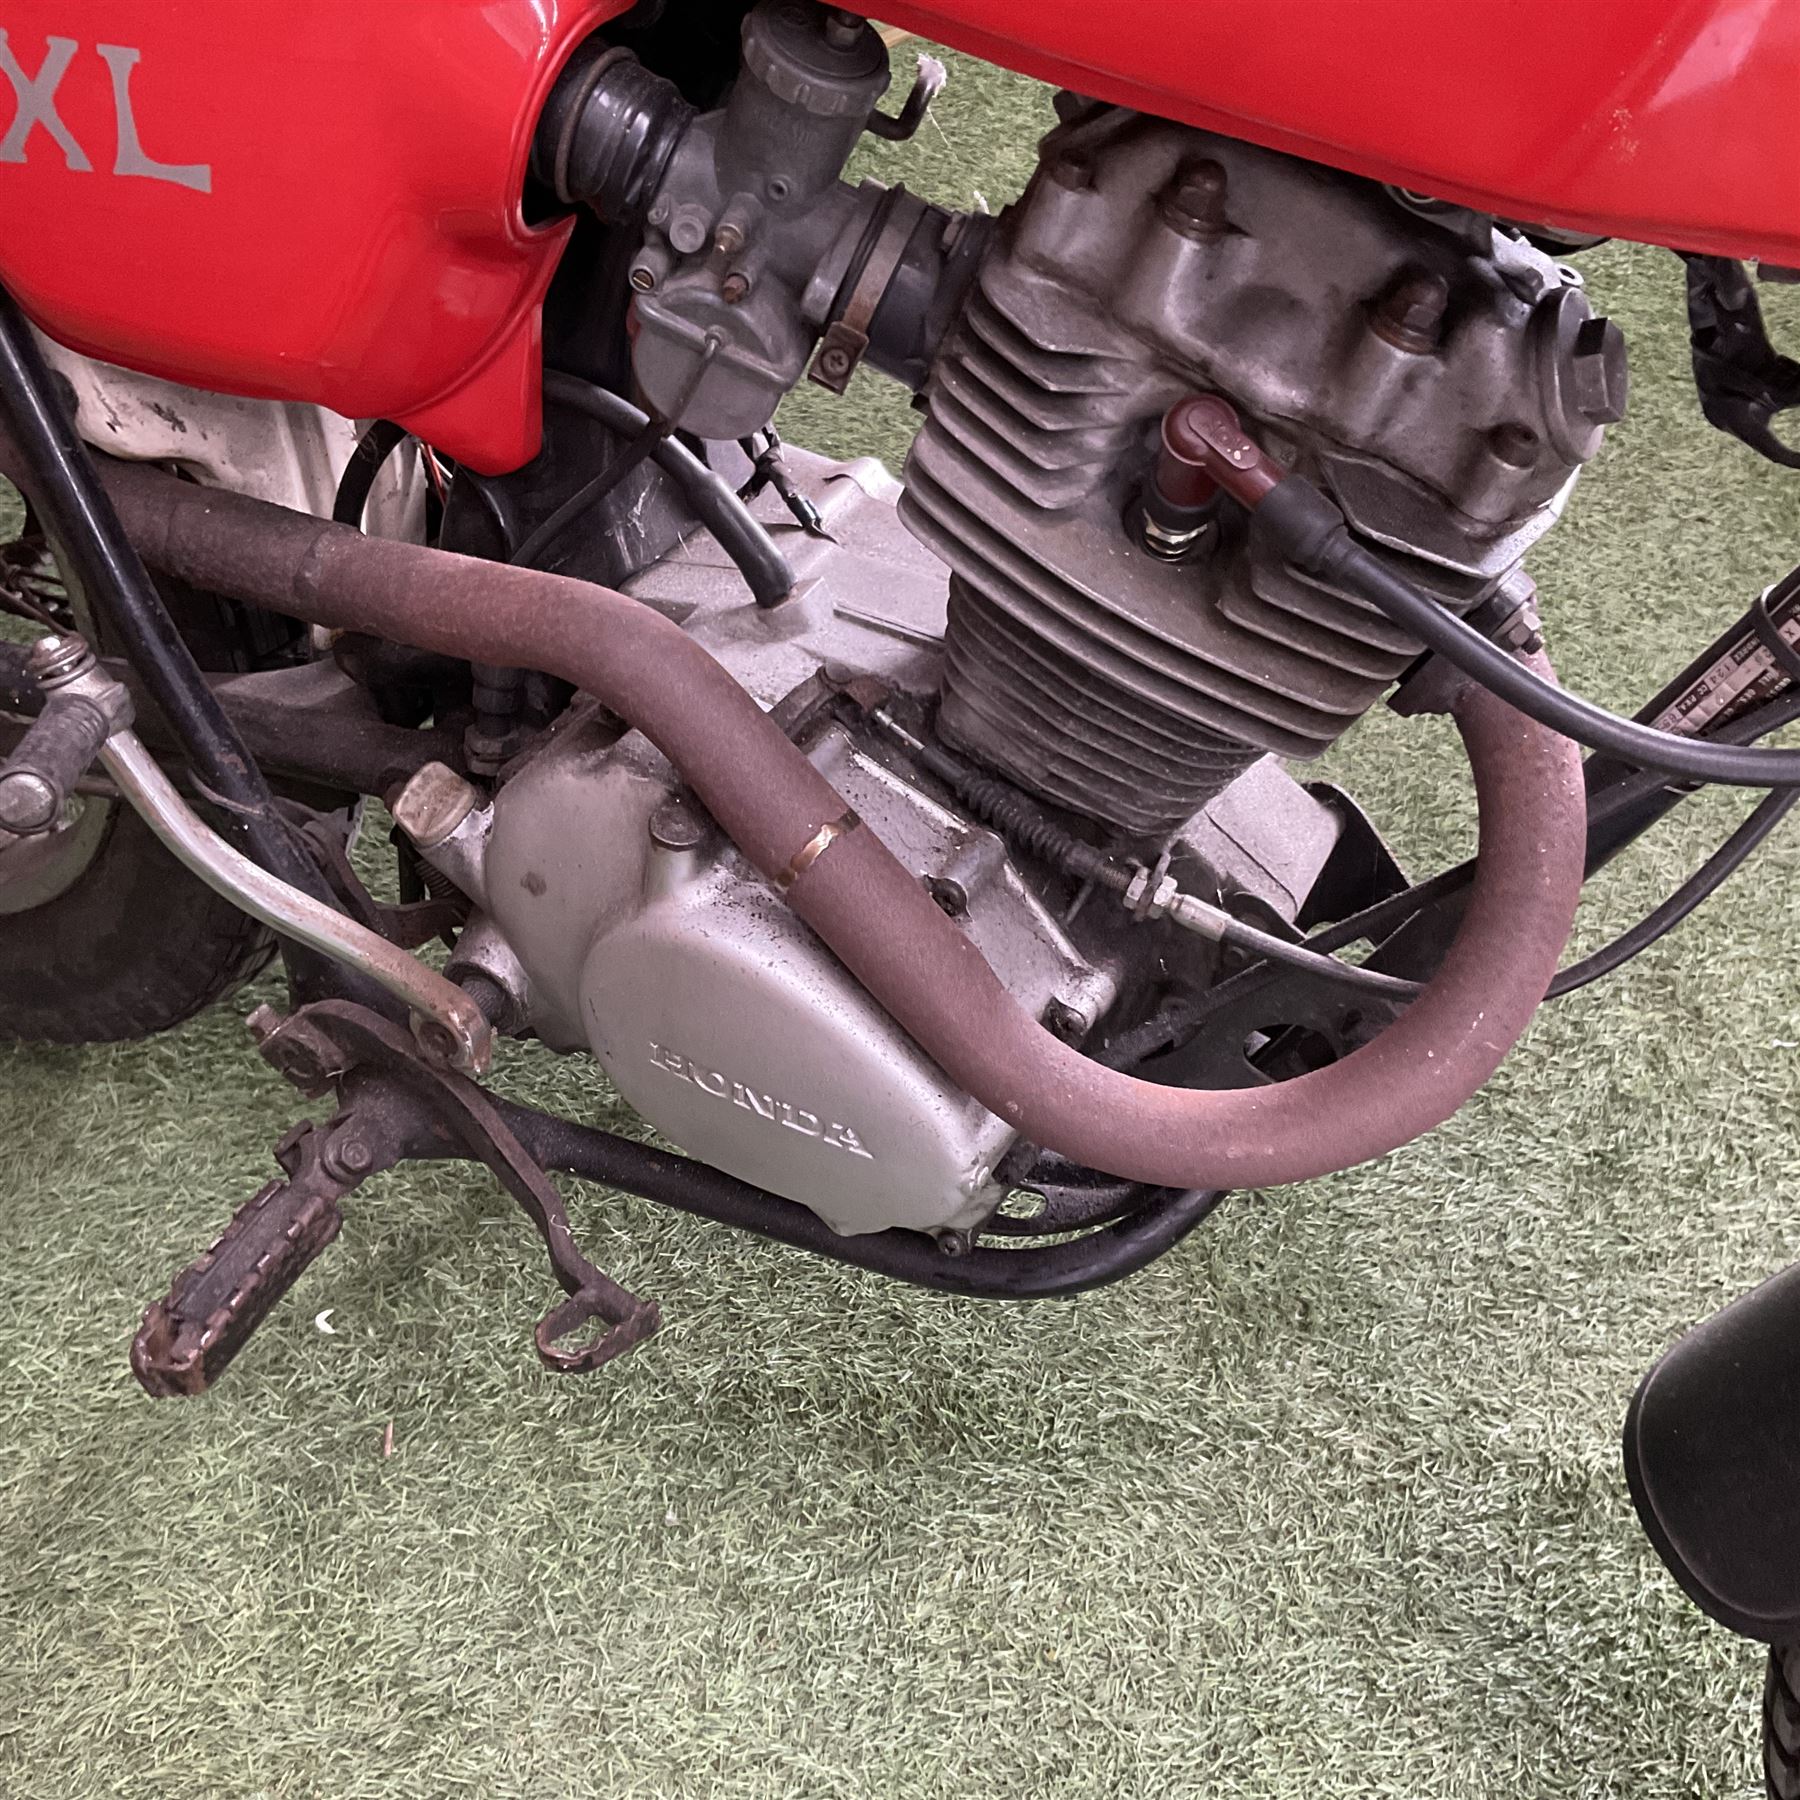 Honda XL125 motorcycle - Image 5 of 9